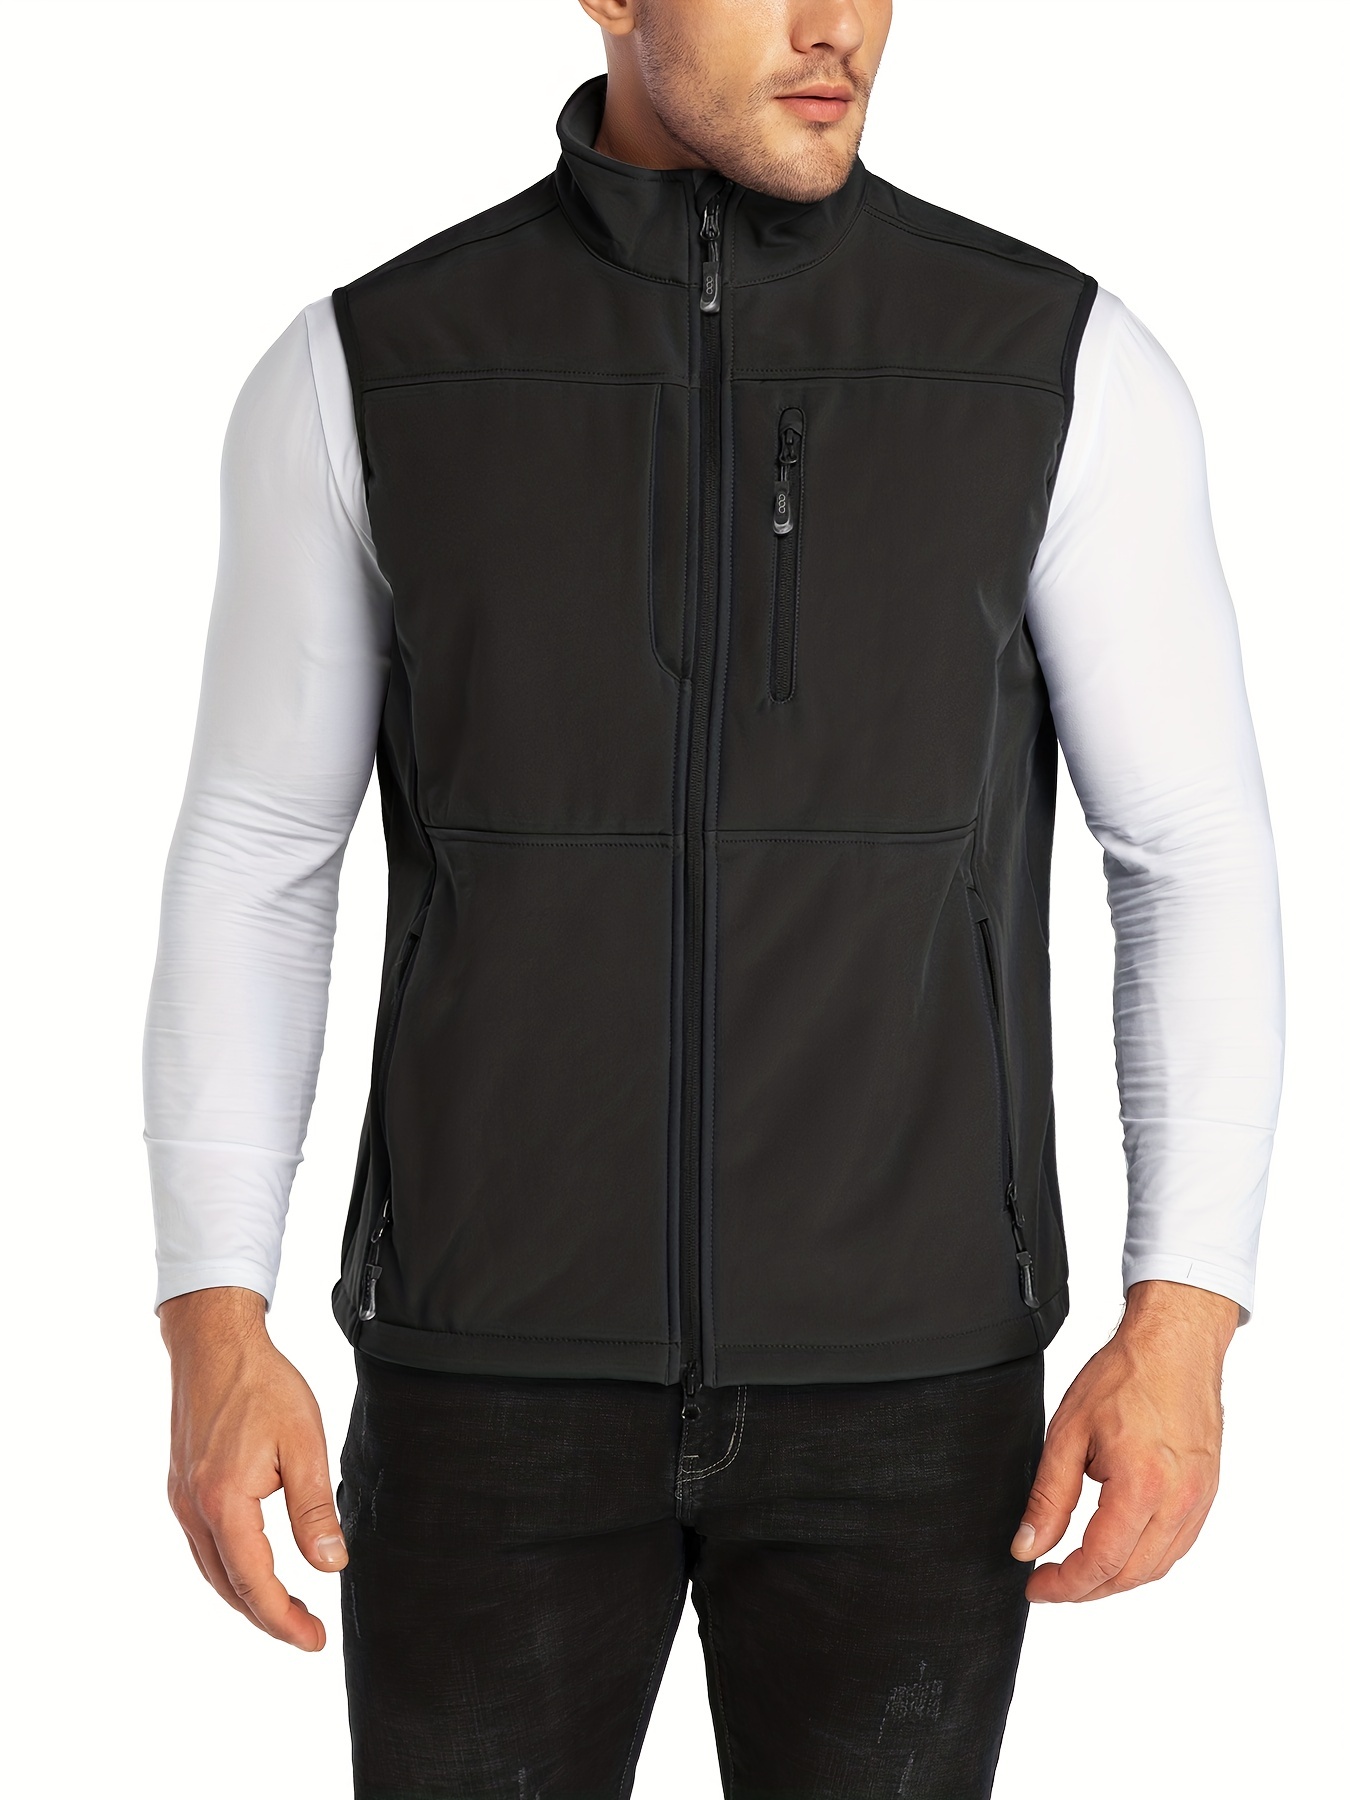 33,000ft Women's Running Vest Fleece Lined Zip Up Windproof Lightweight  Softshell Vests Outerwear for Golf Hiking Sports